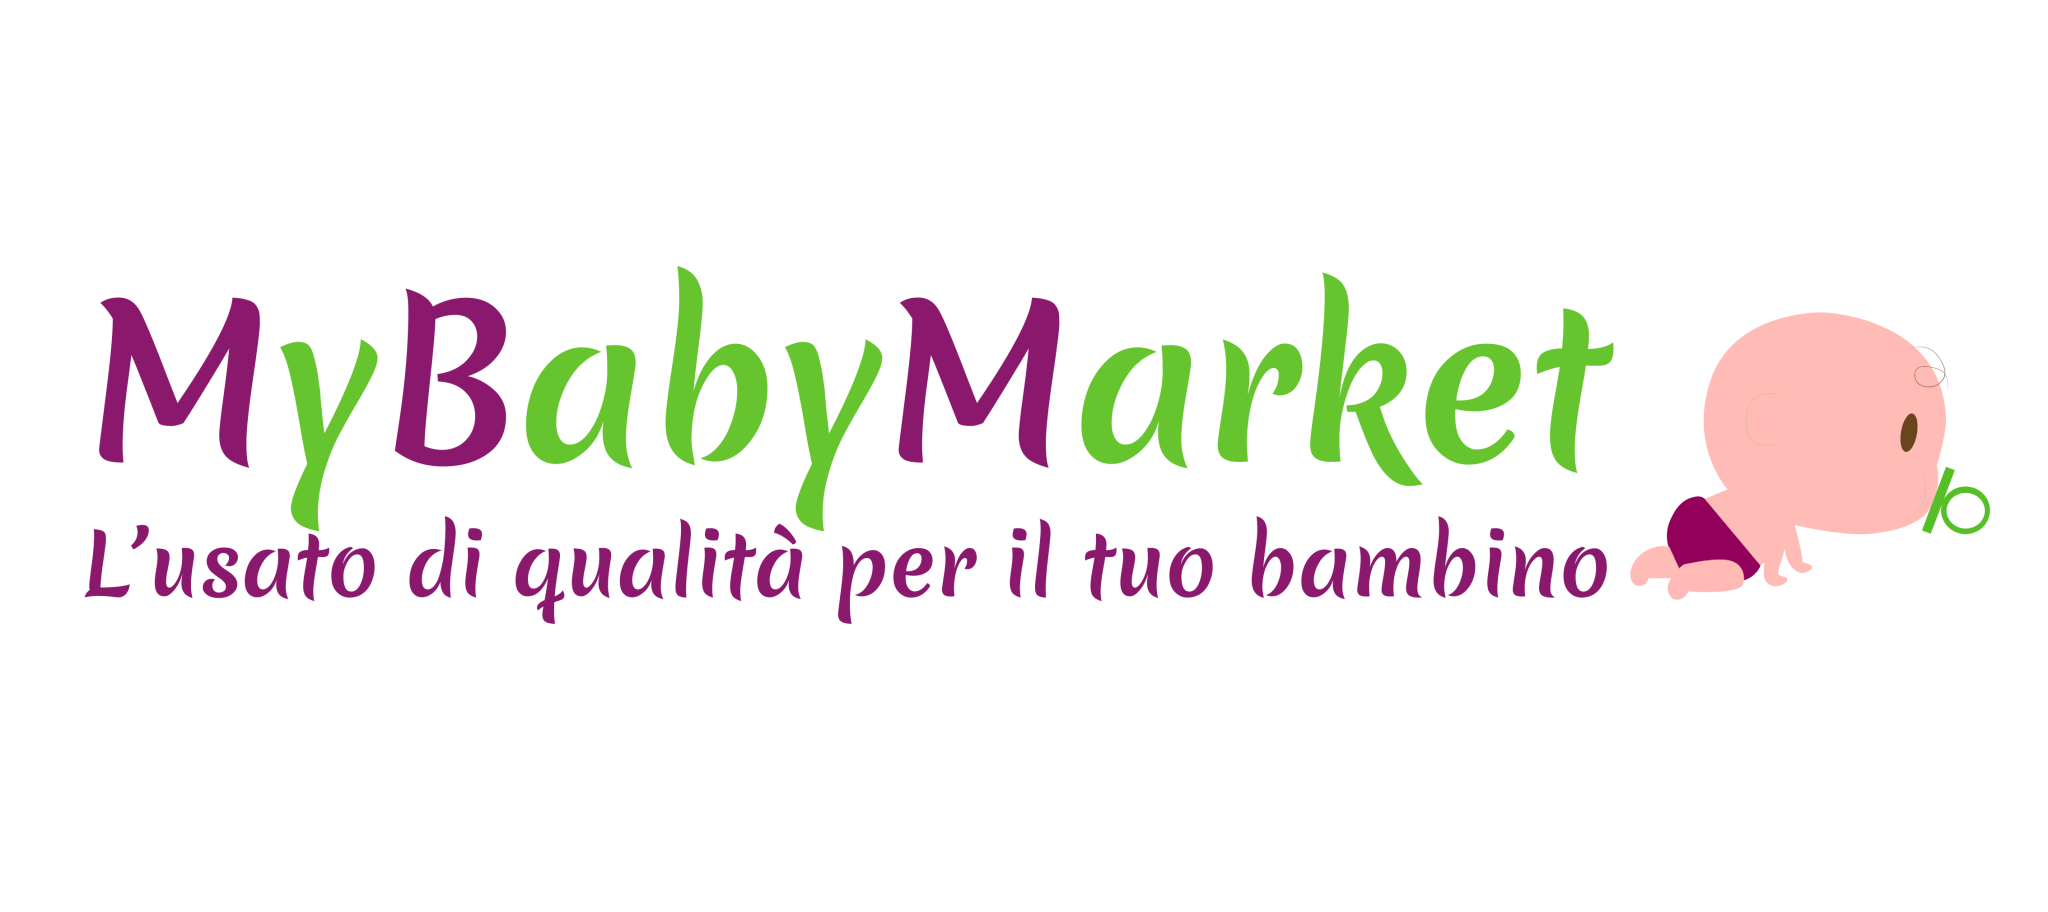 MyBabyMarket